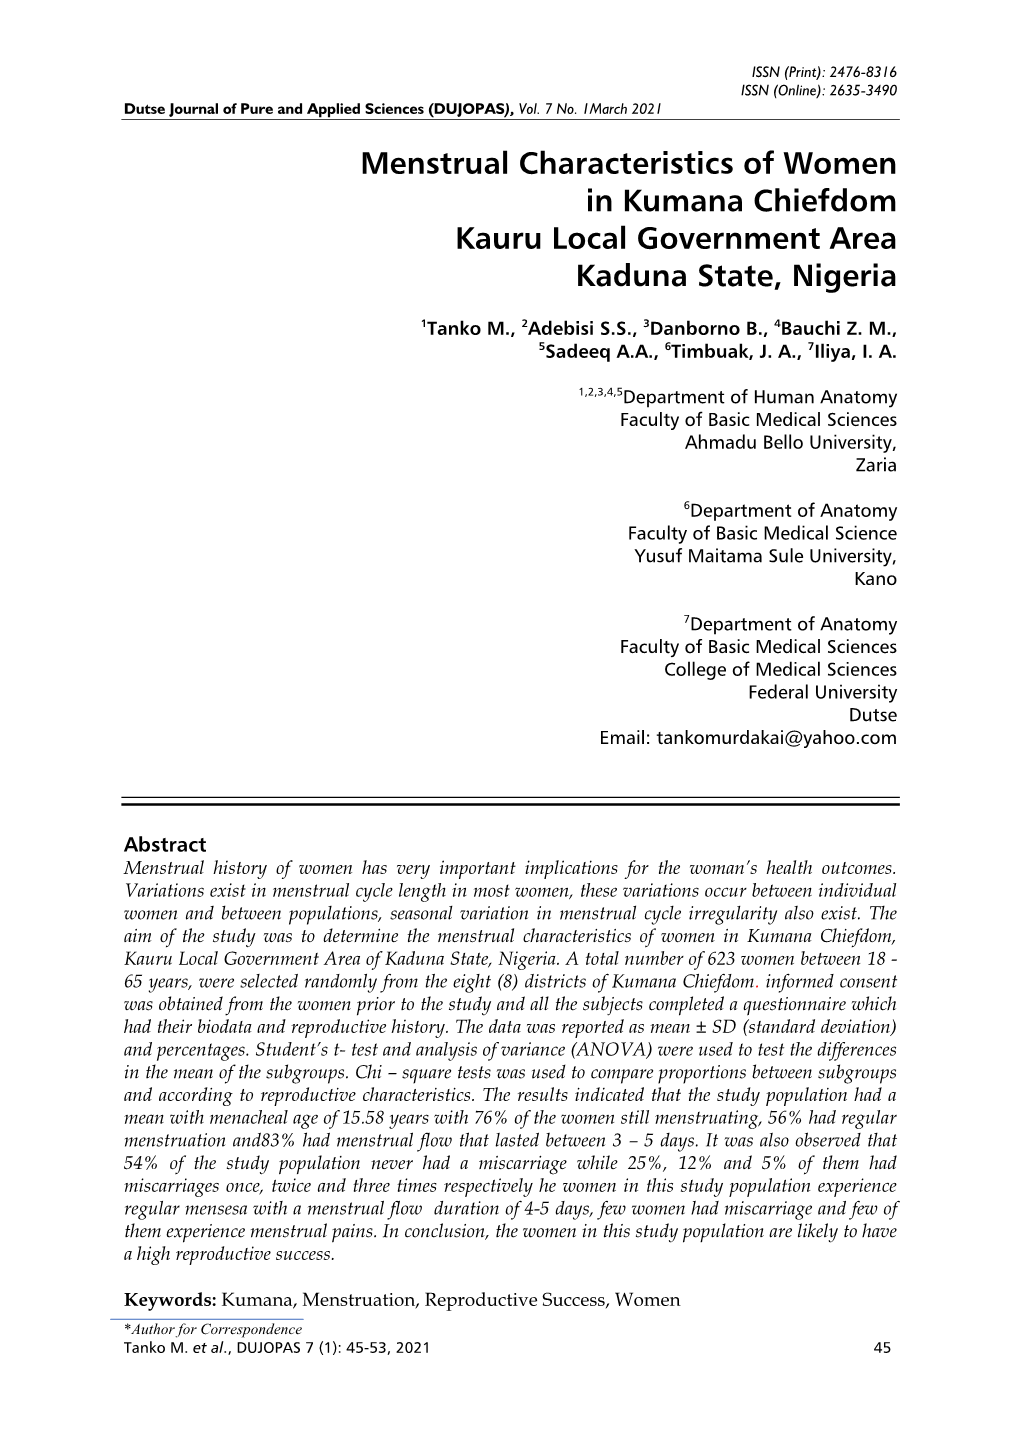 Menstrual Characteristics of Women in Kumana Chiefdom Kauru Local Government Area Kaduna State, Nigeria